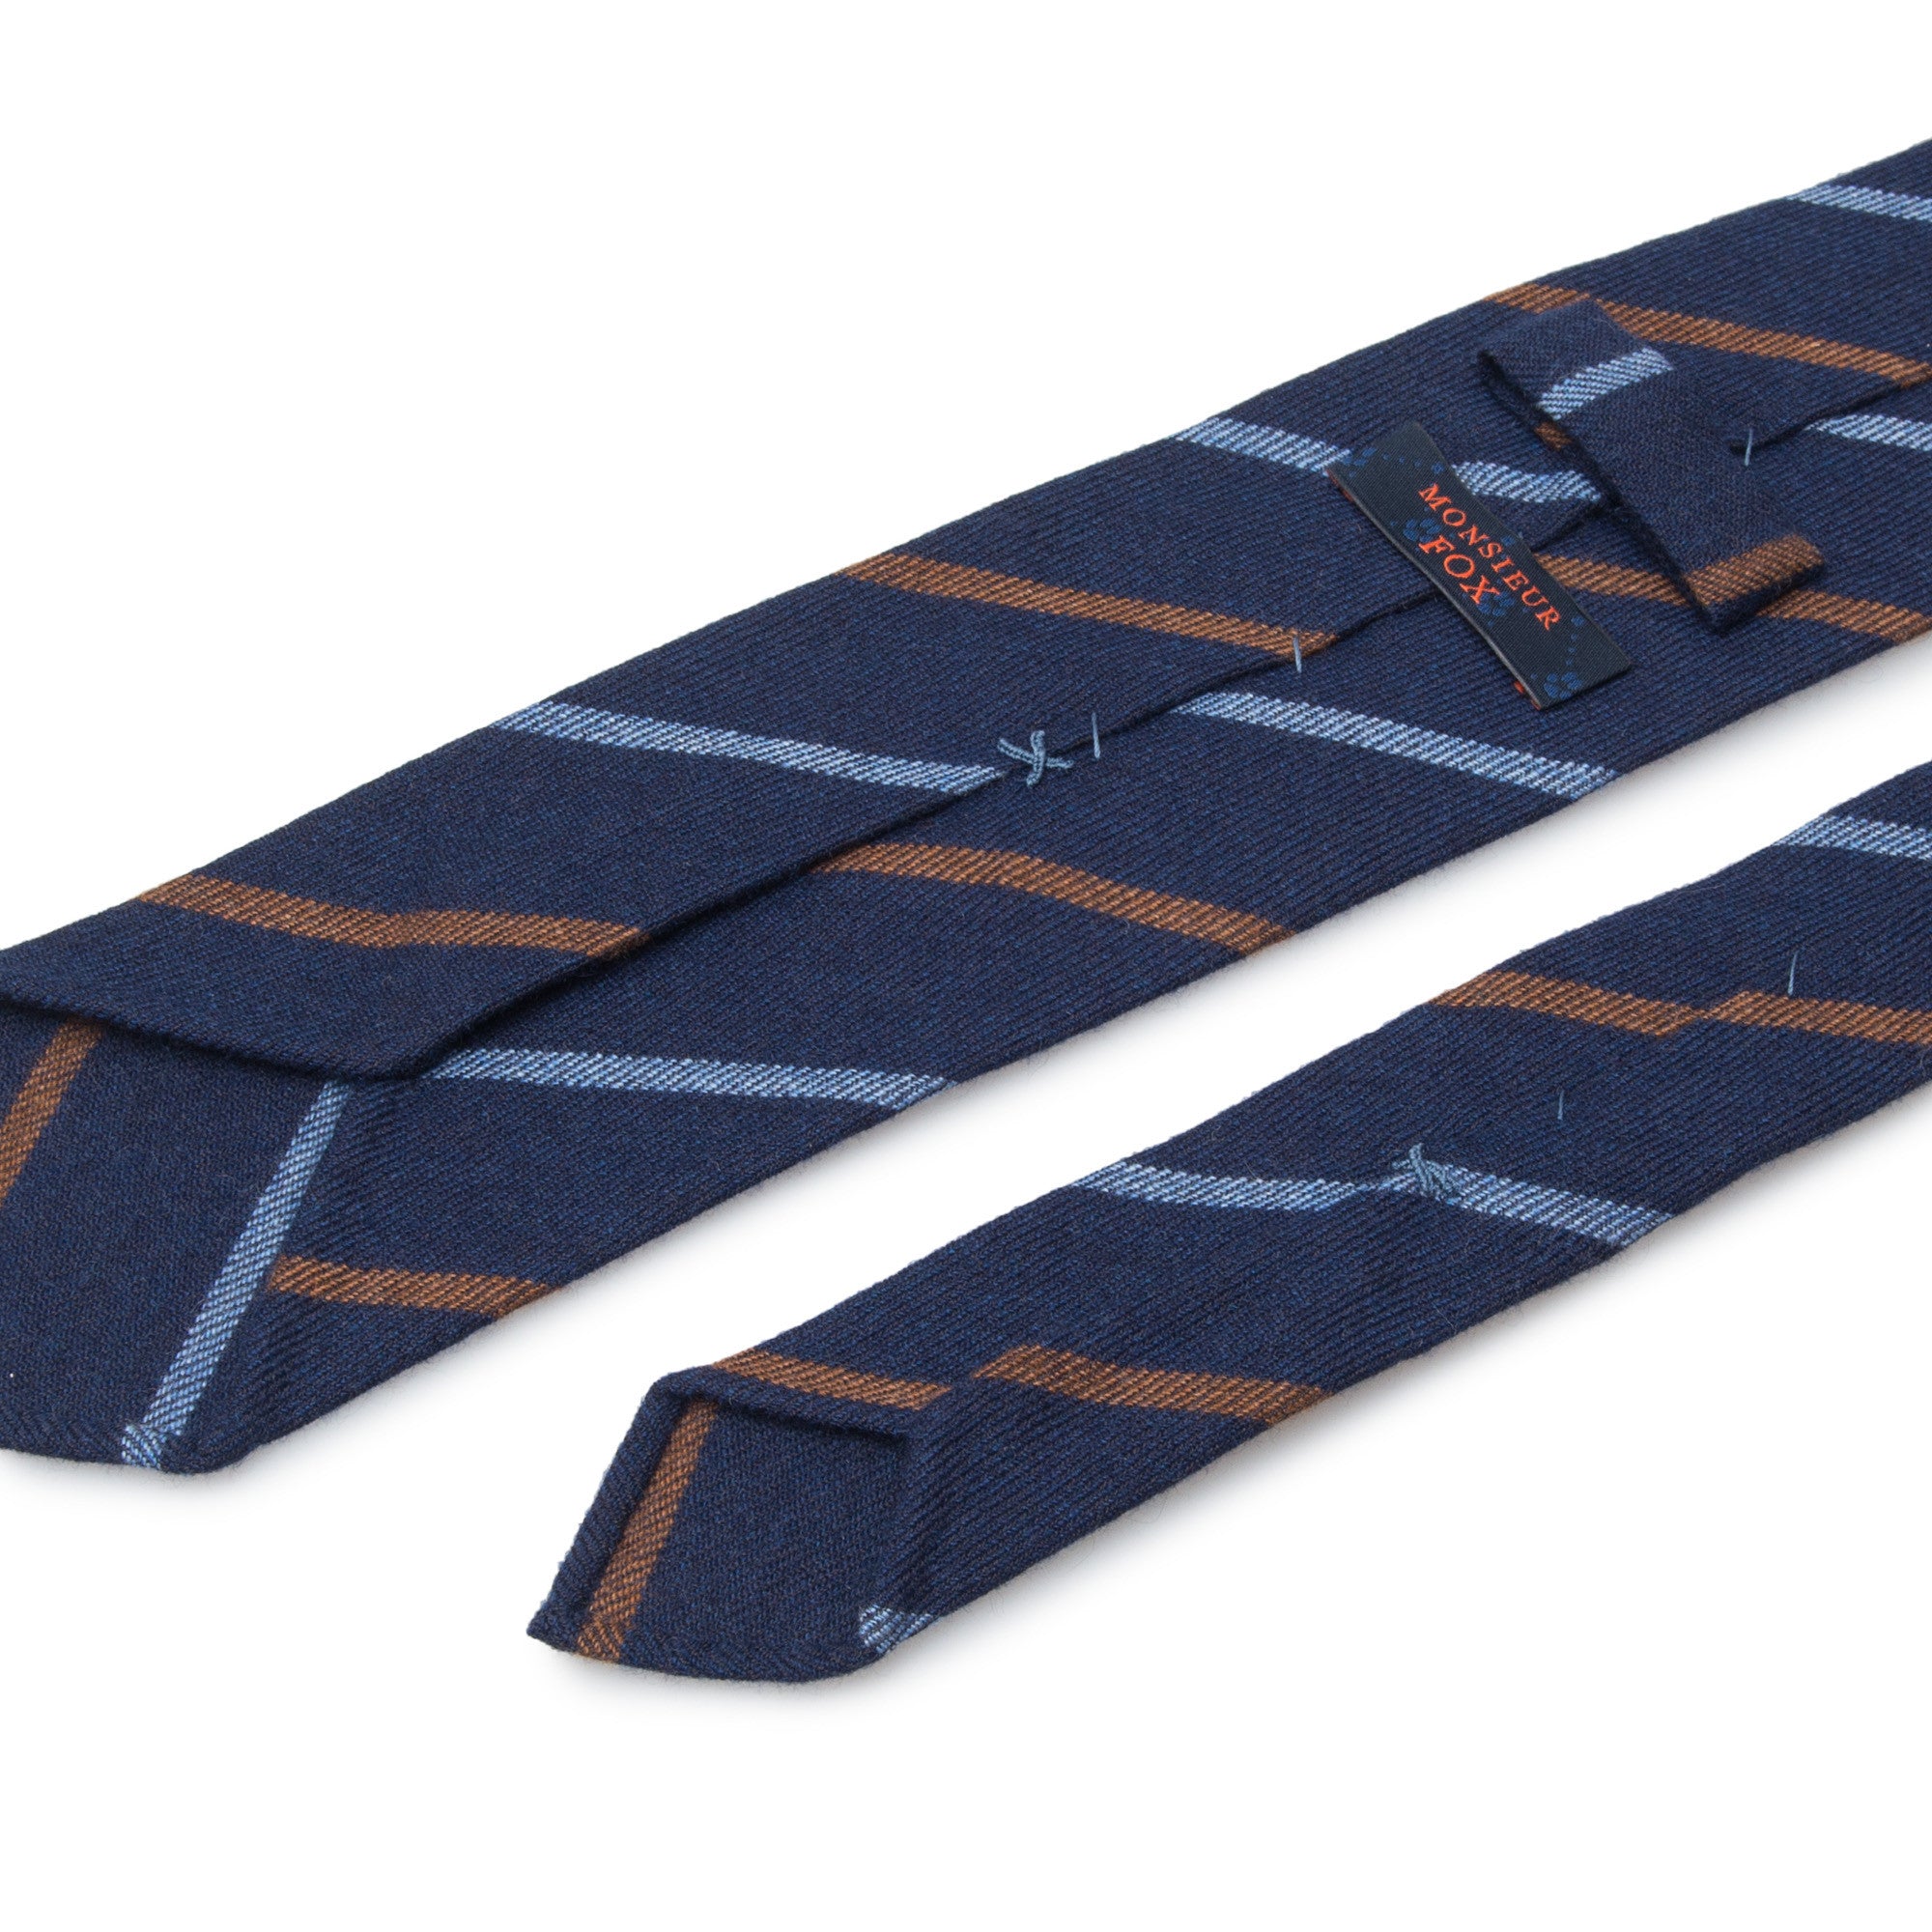 Striped Cashmere Tie - Light Blue and Brown on Dark Navy